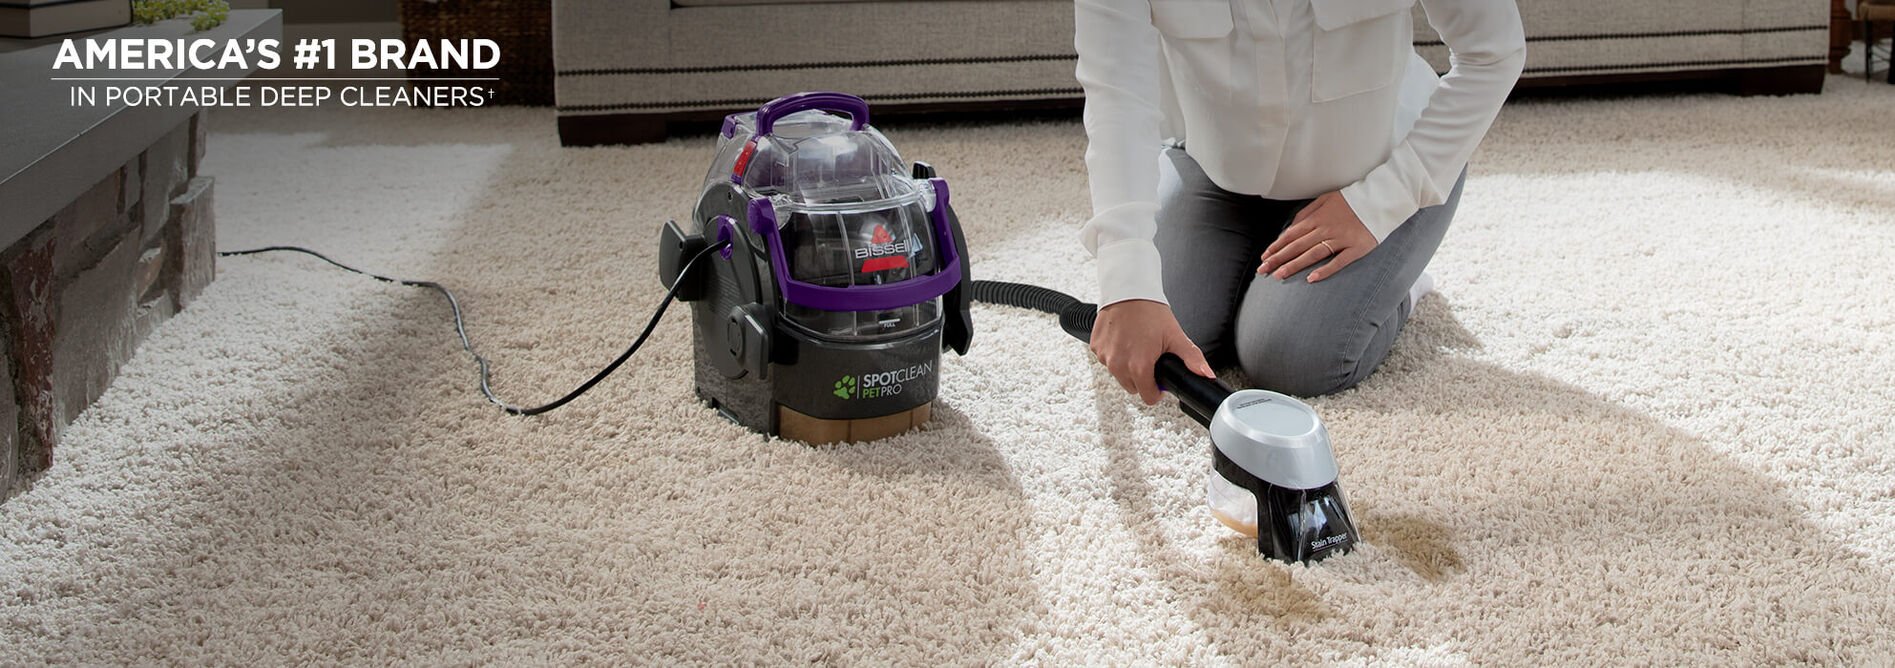 BISSELL SpotClean Pet Pro Portable Carpet Cleaner, 2458, Grapevine Purple,  Black, Large - AliExpress